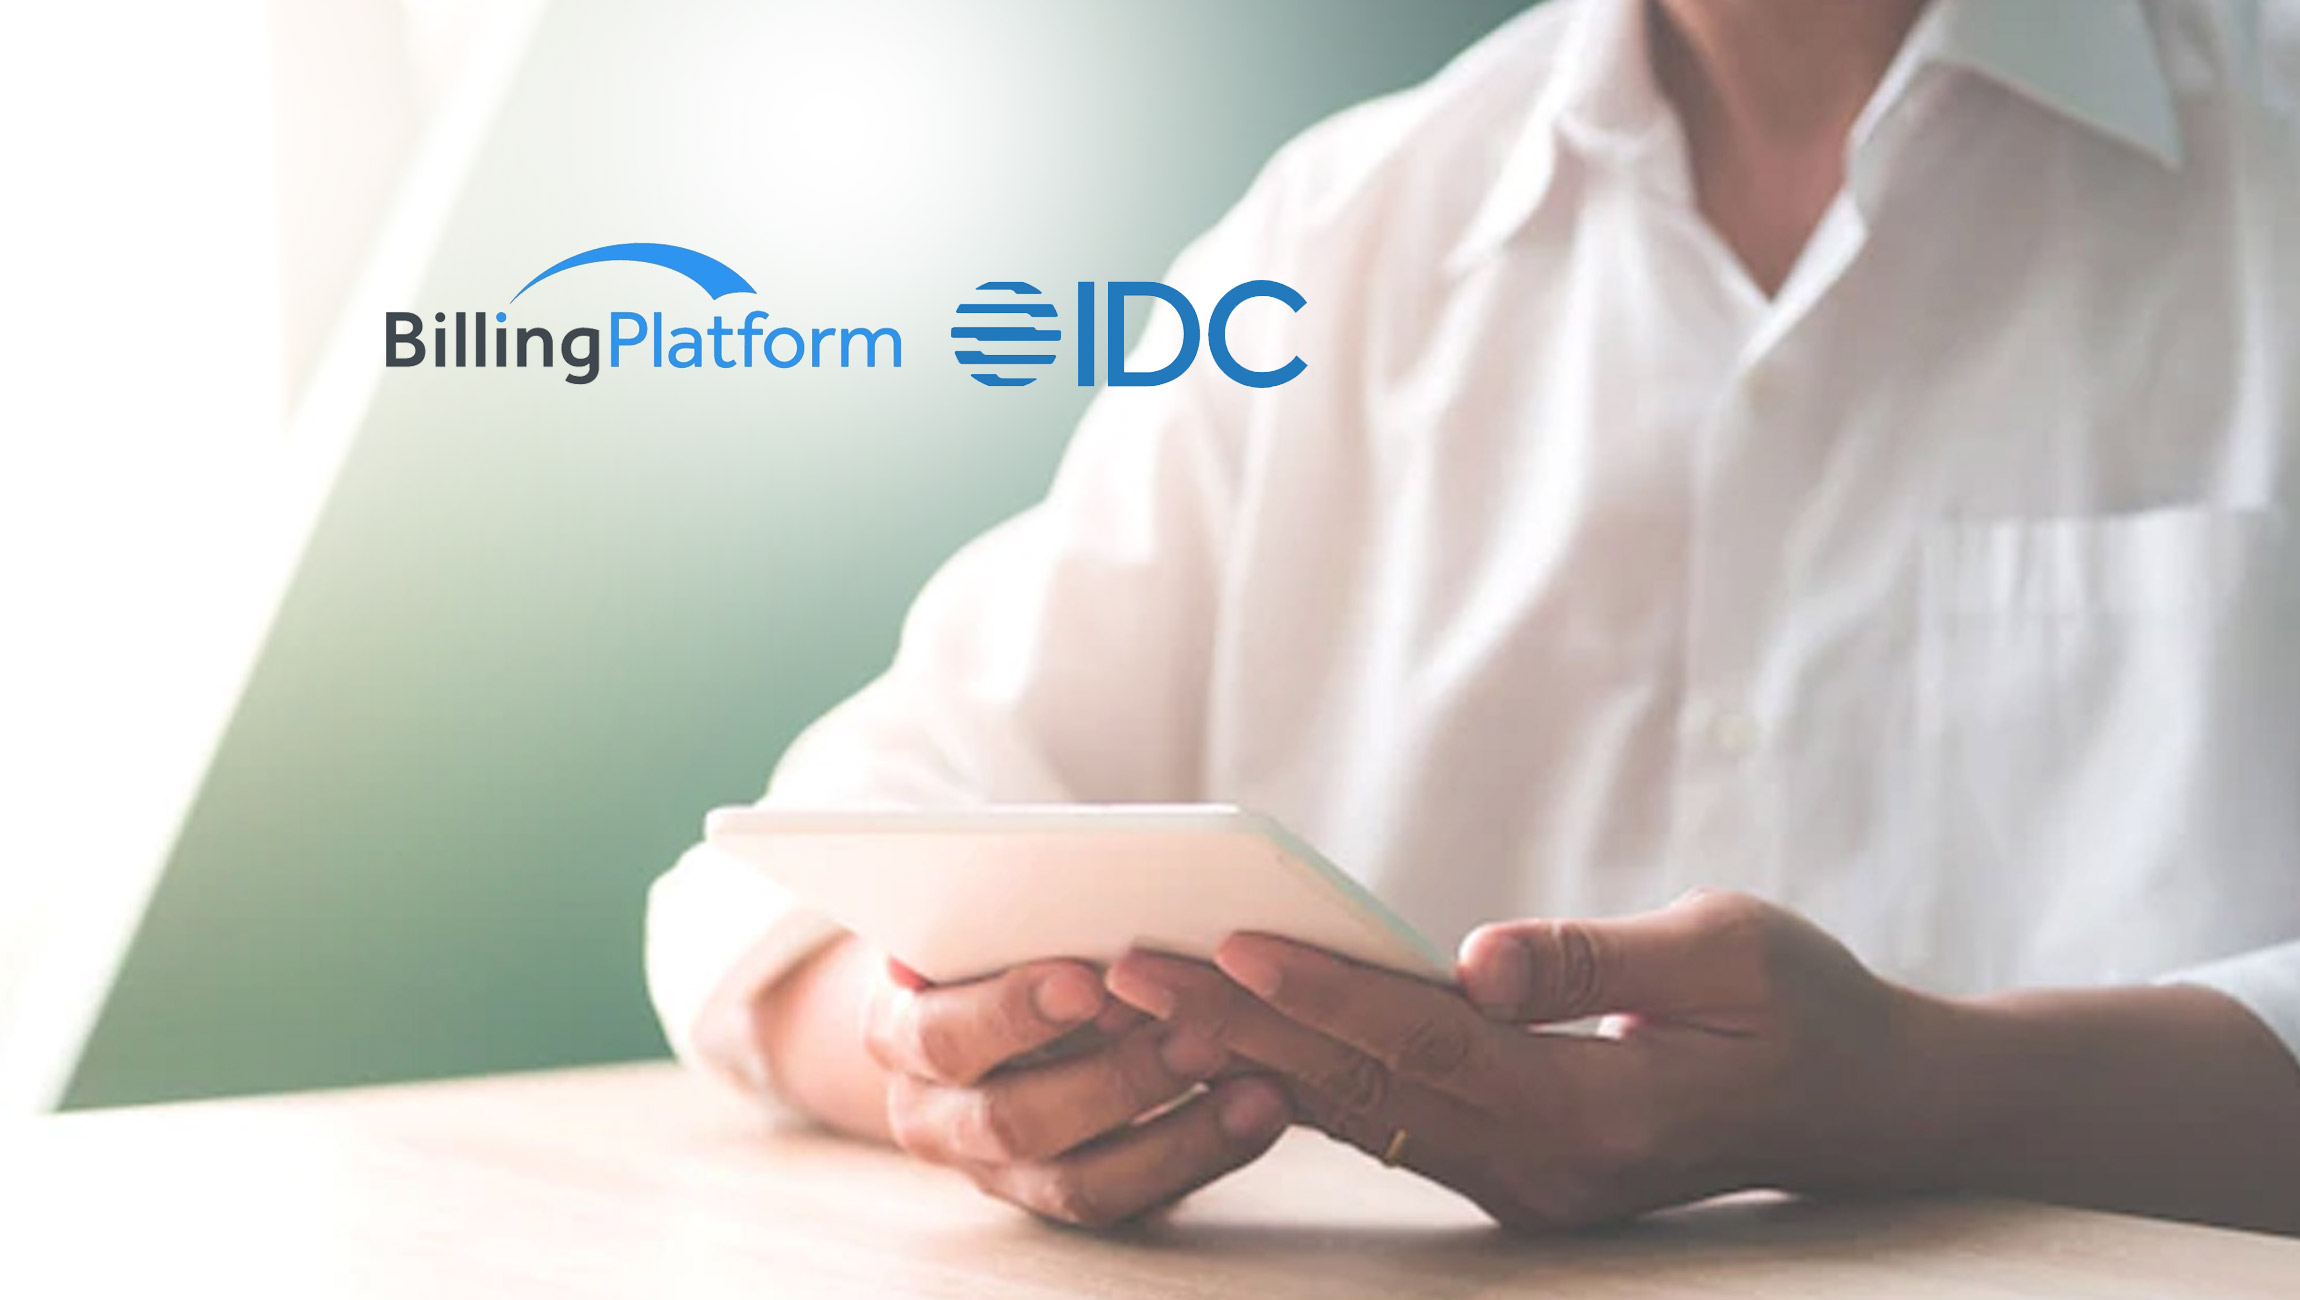 BillingPlatform Named a Leader in IDC MarketScape for Enterprise-Focused Subscription and Usage Management Applications